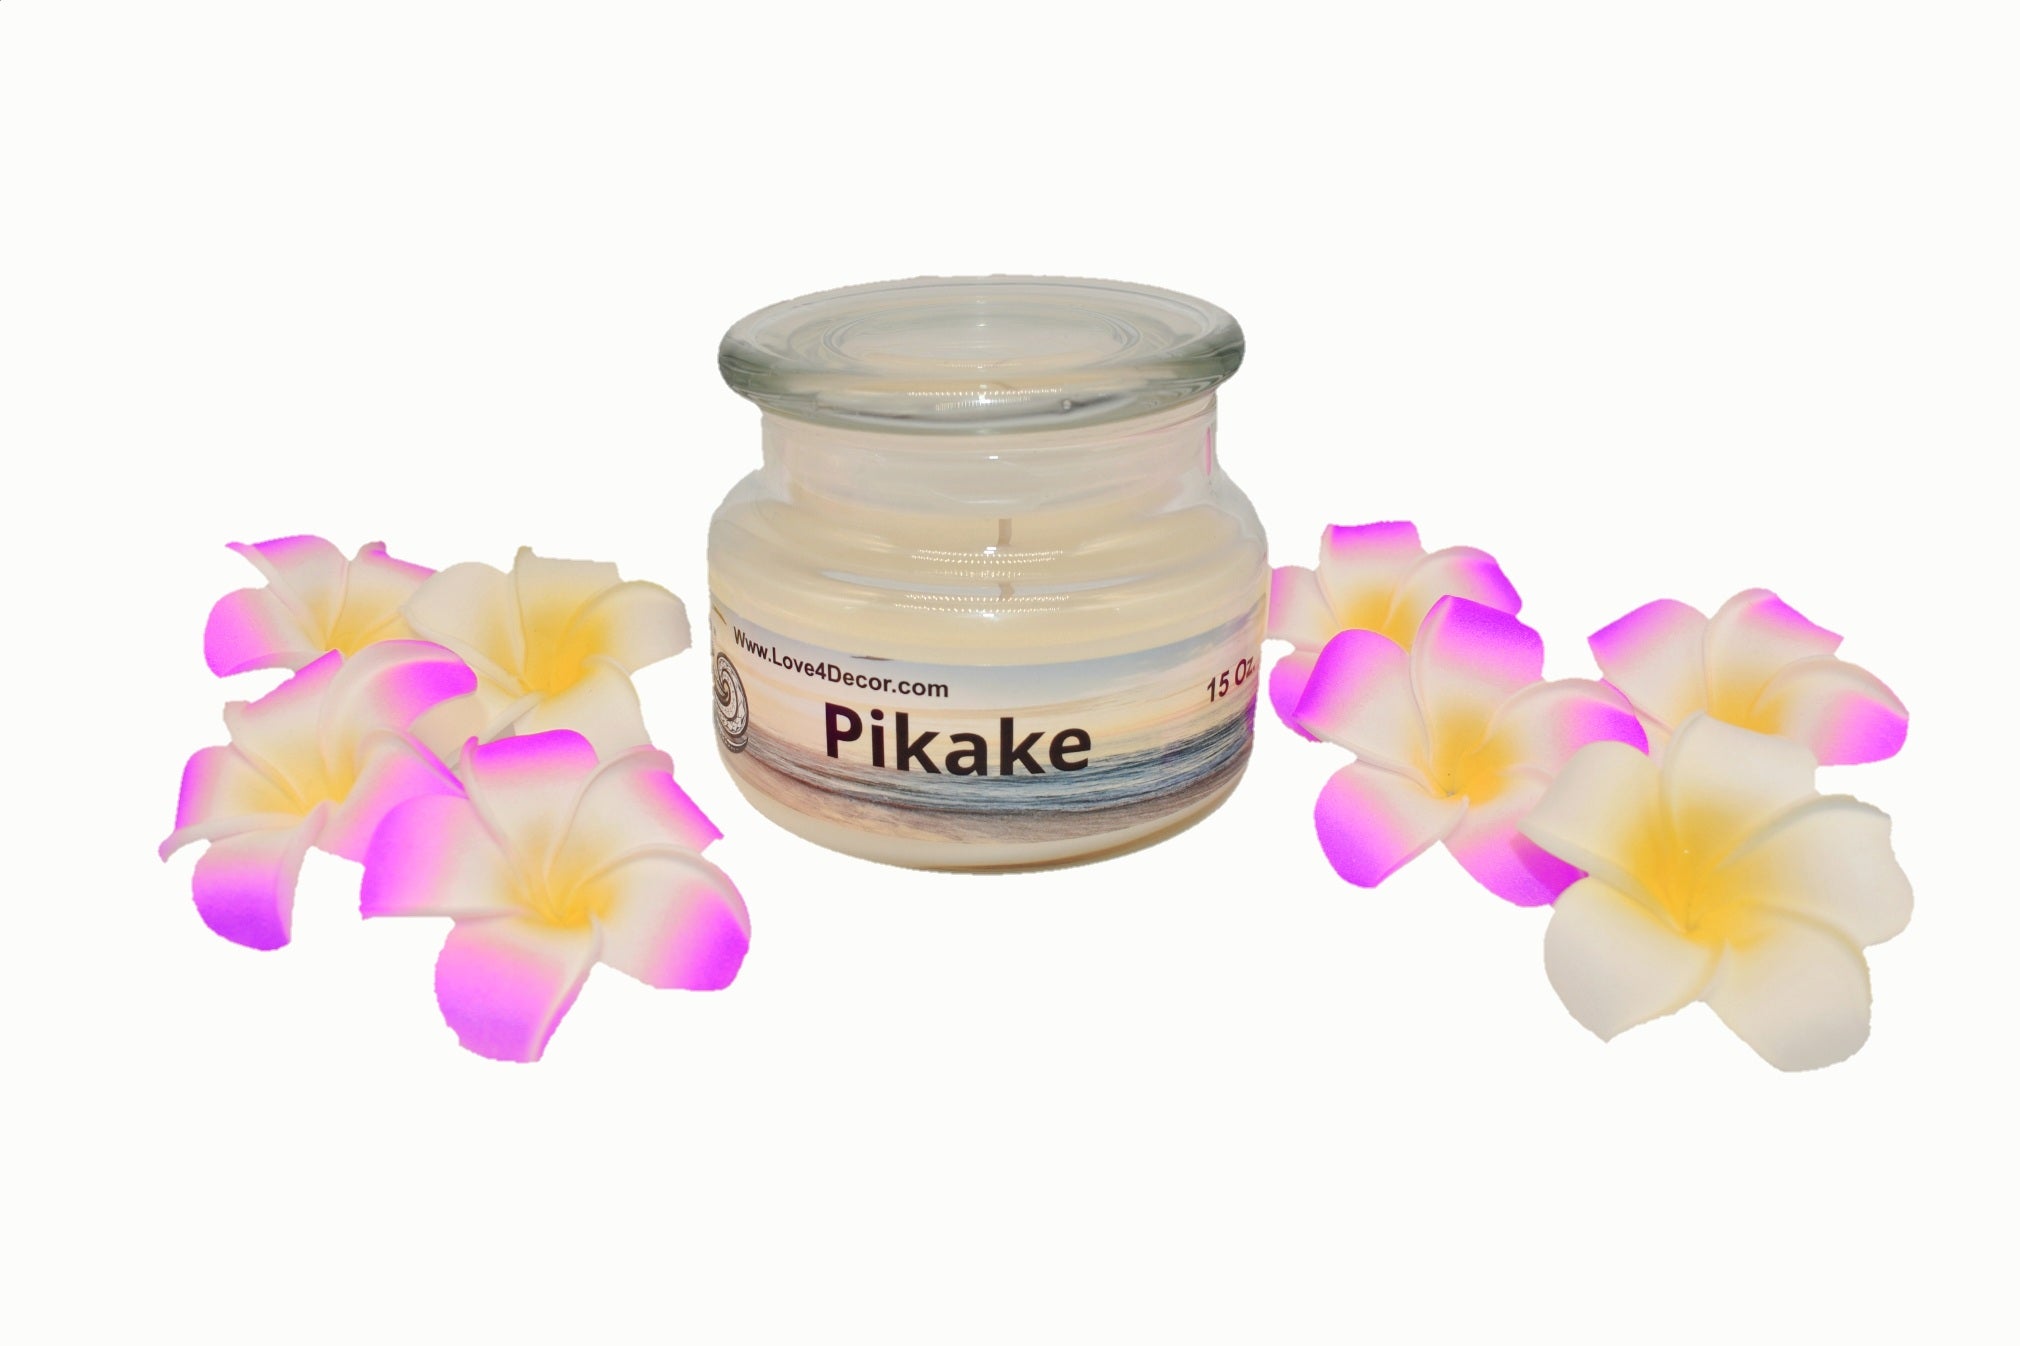 The Pikake Scent